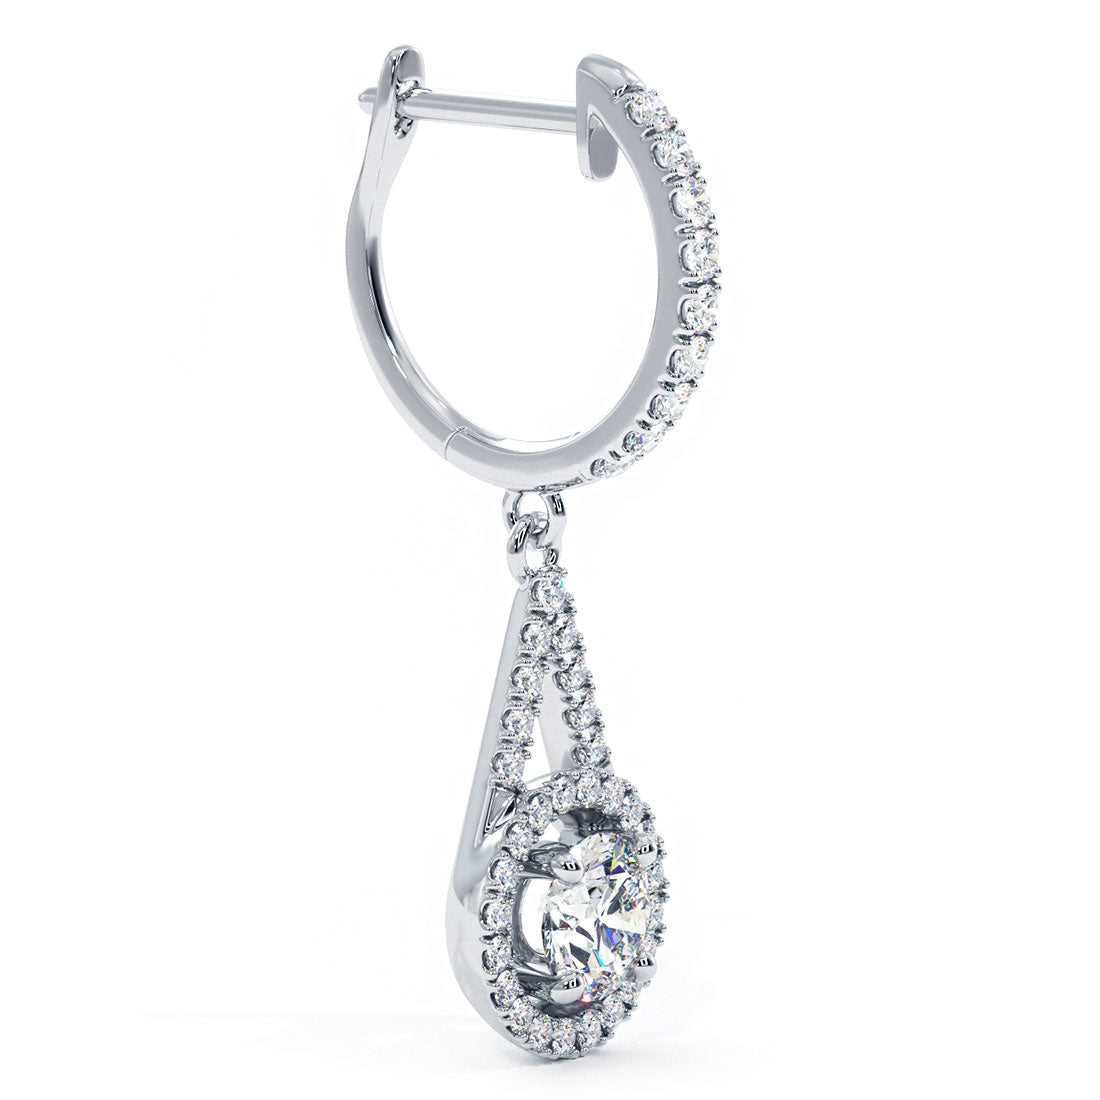 1.55 Carat Round Diamond Leverback Hanging Drop Earrings 18k White Gold